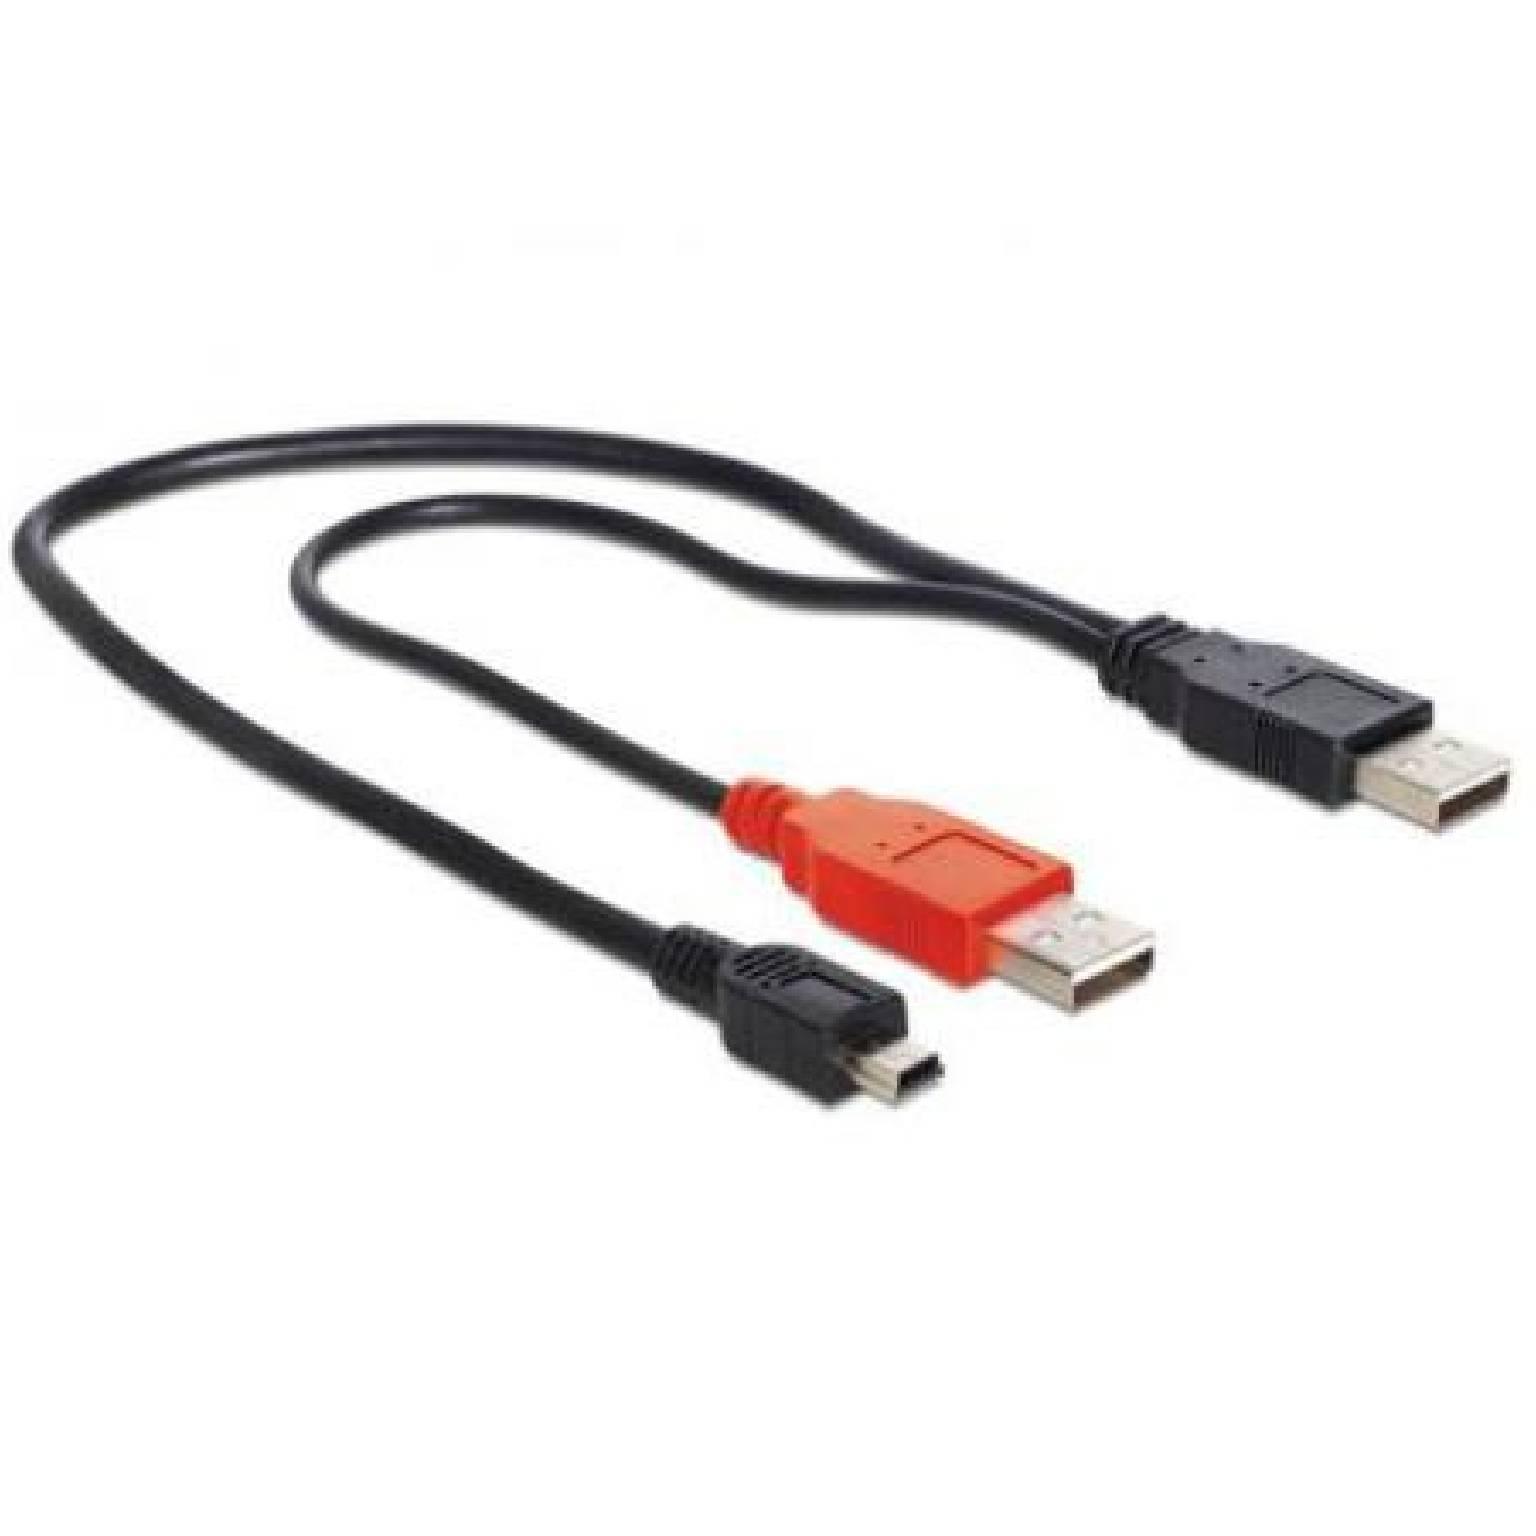 Mini USB Y Kabel 2.0 - Delock